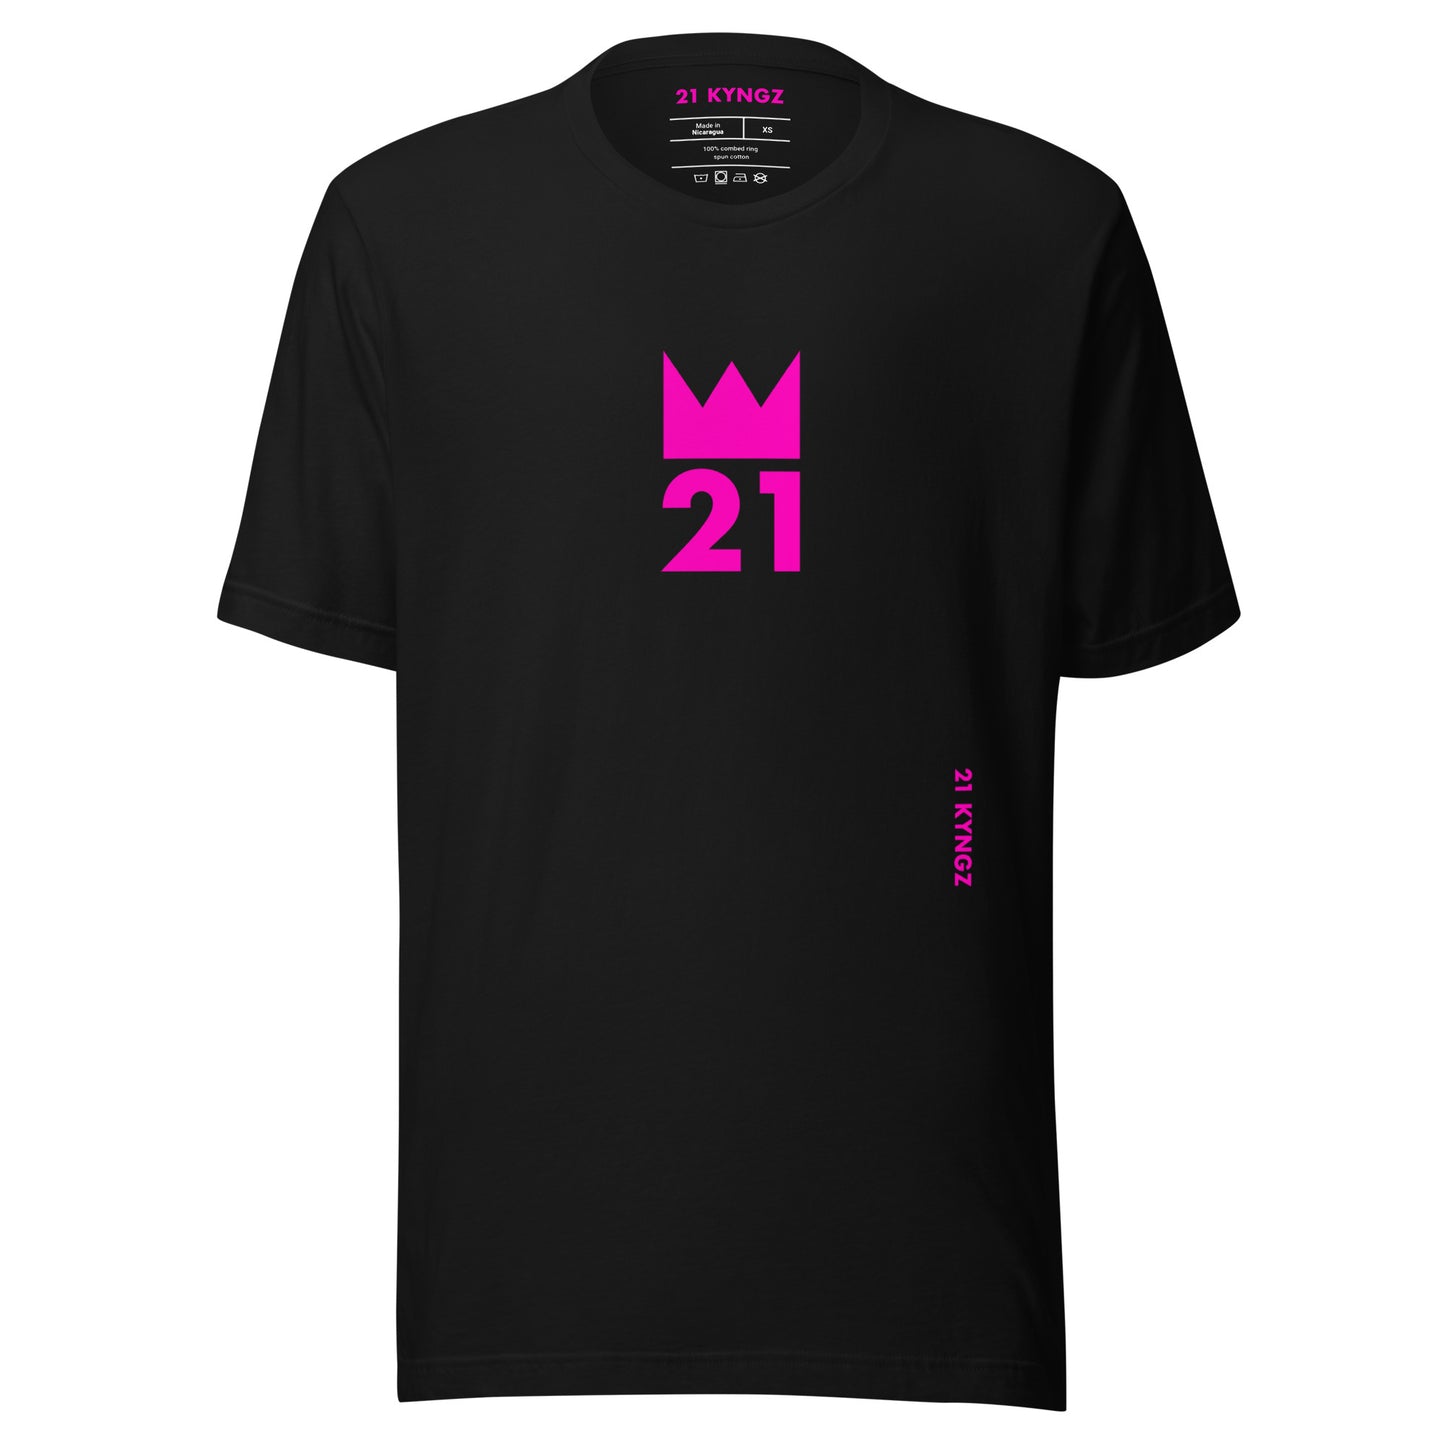 21 KYNGZ (Pi)2 t-shirt